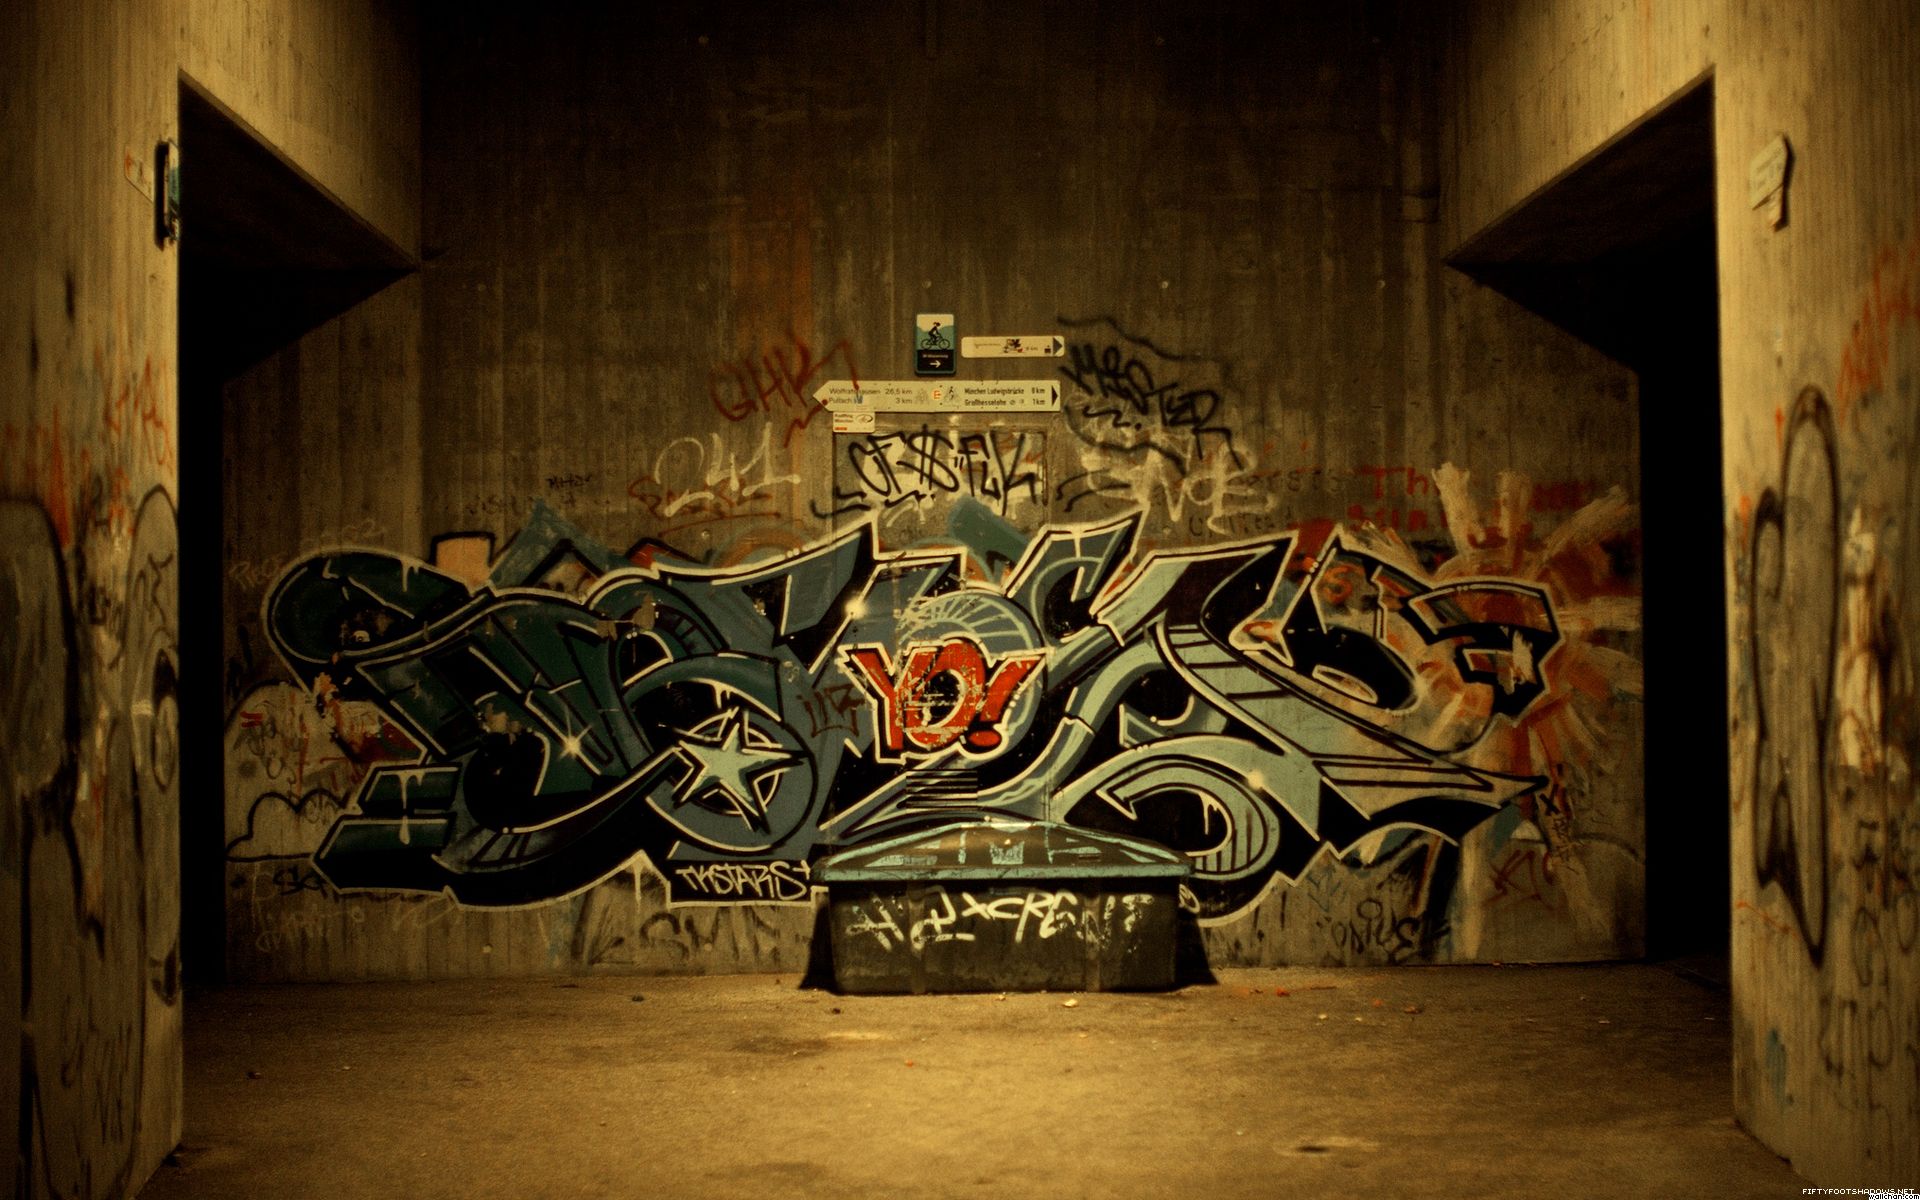 Love Graffiti Wallpapers